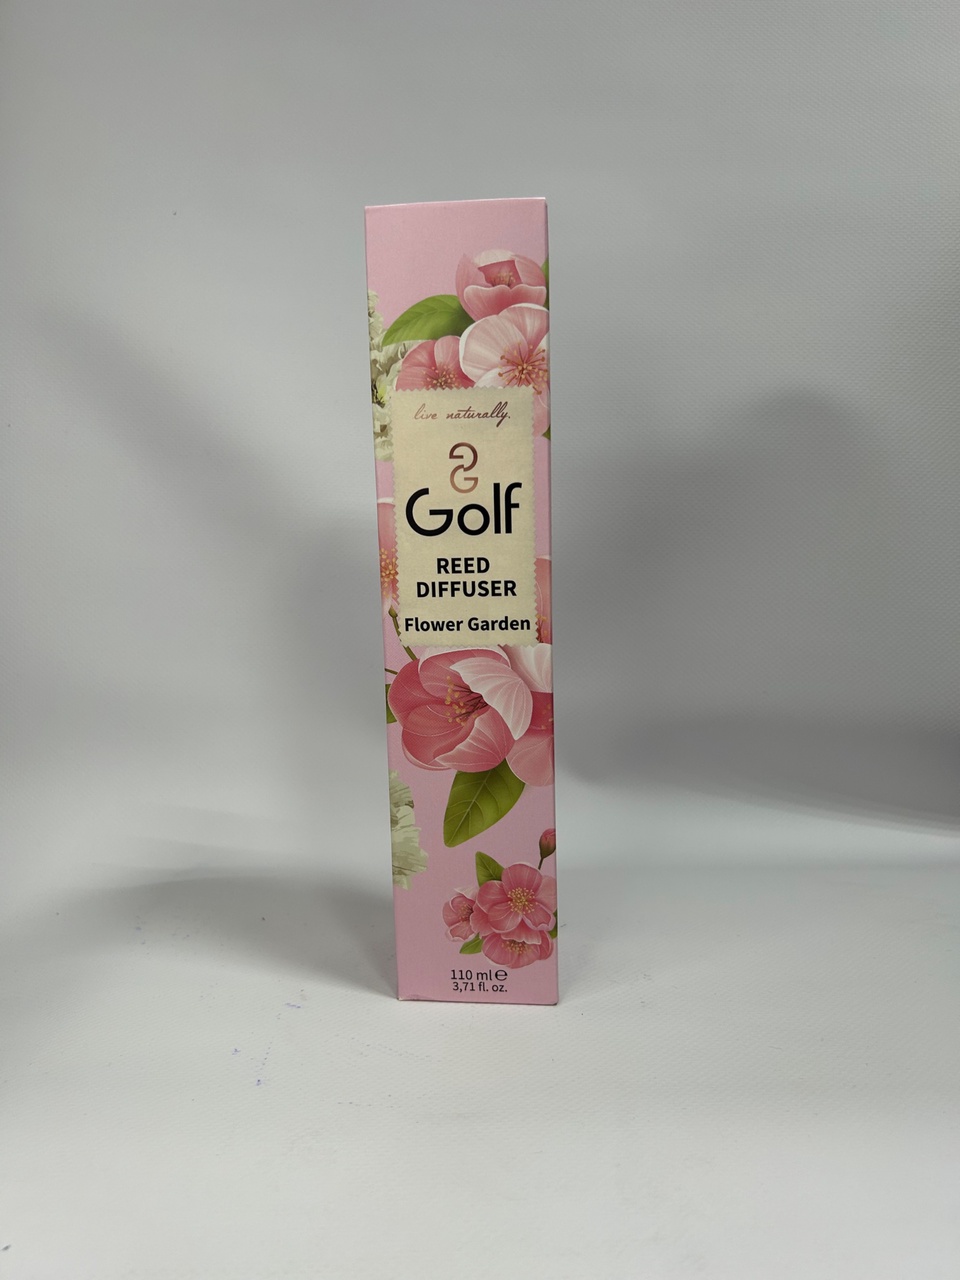 Ароматический диффузор Golf “Цветочный сад», 110ml - 550 ₽, заказать онлайн.